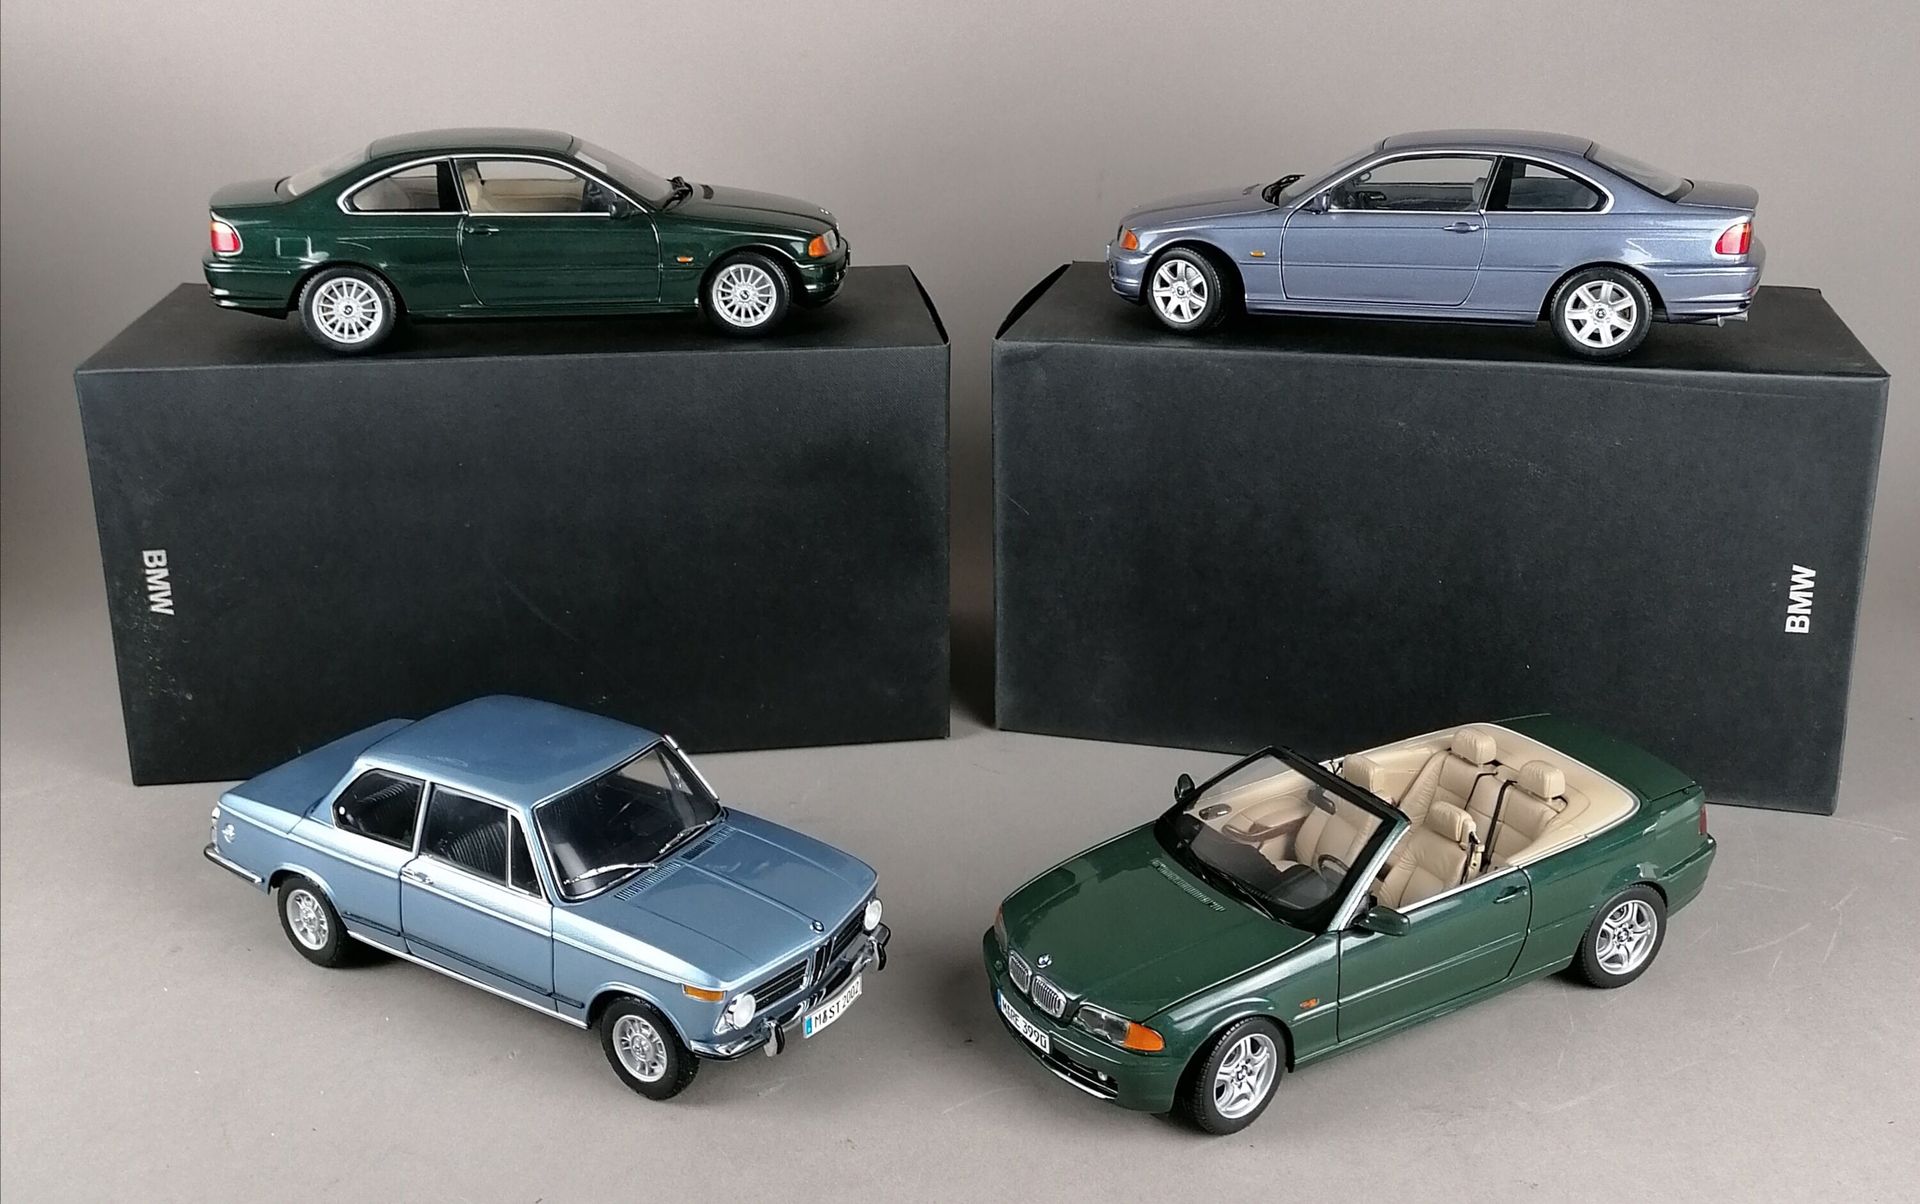 Null BMW - VIER BMWs im Maßstab 1:18:

1x 3Serie Cabrio

1x 2002 Til

1x 328Ci

&hellip;